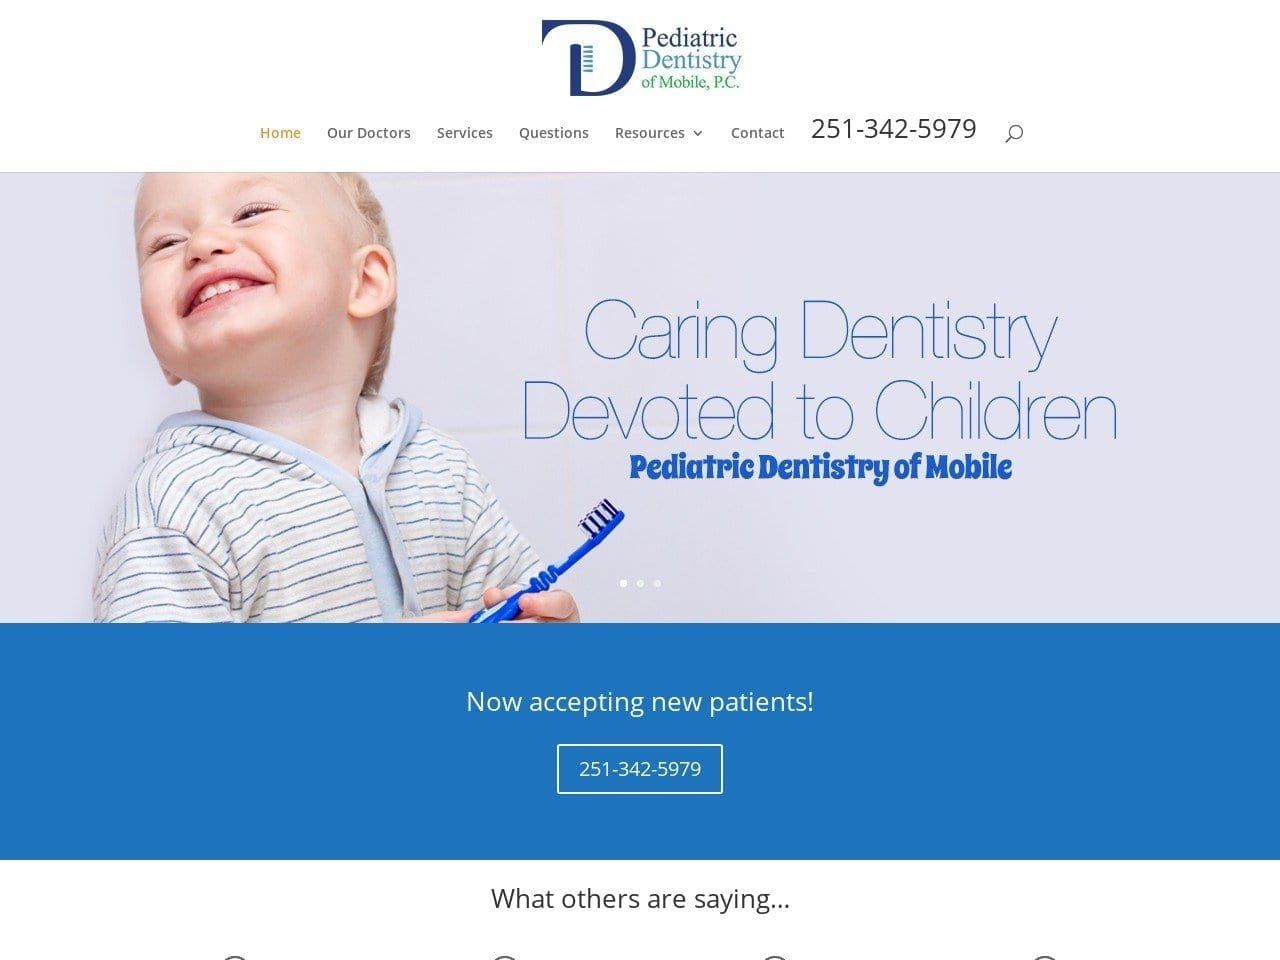 Pediatric Dentistry of Mobile P.C. Website Screenshot from gulfcoastkidsdentist.com